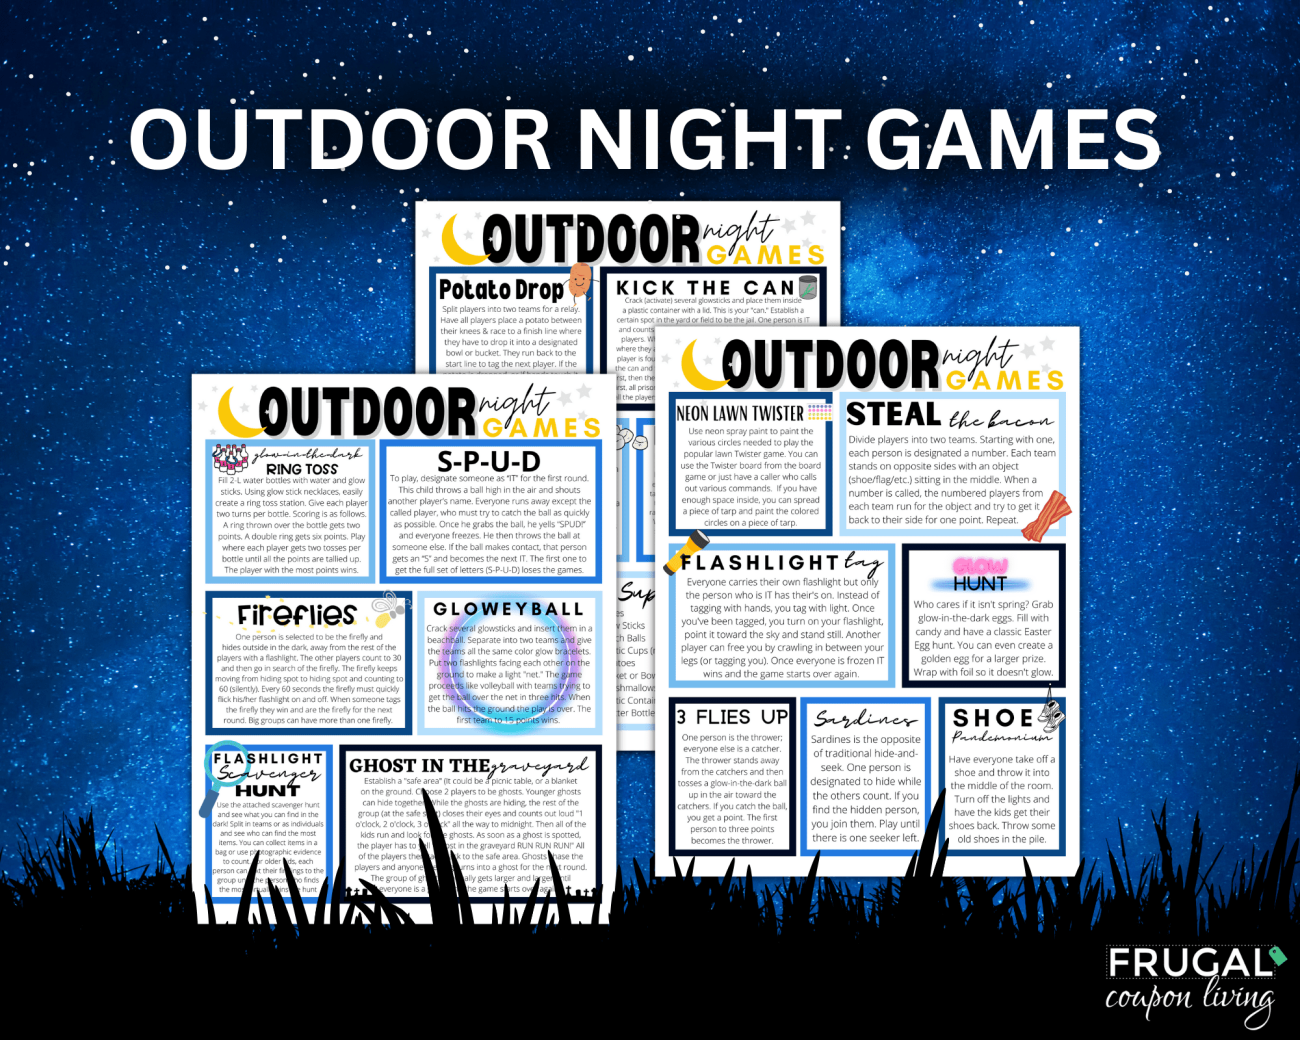 fun games to play outdoors at night